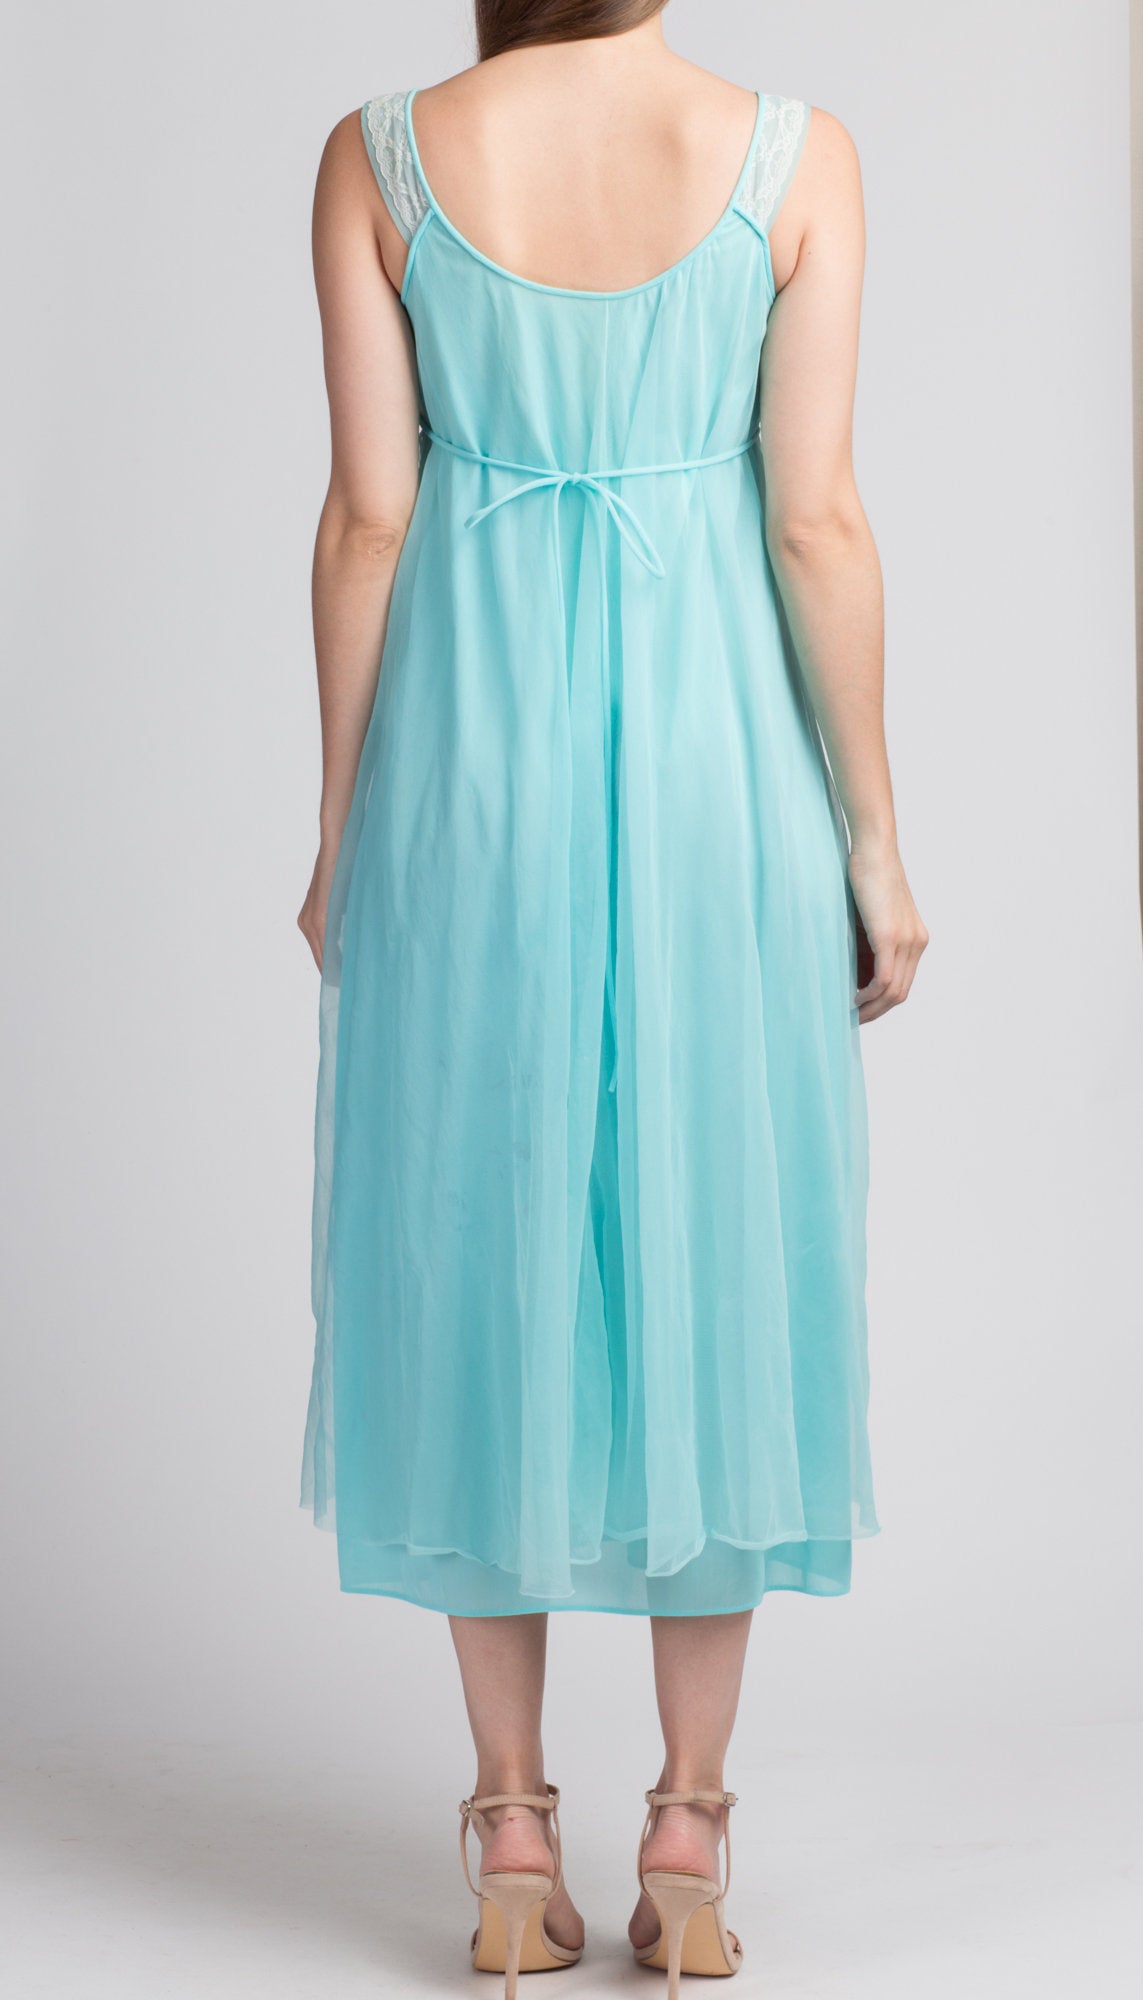 70s Blue Peignoir Nightgown - Small to Medium